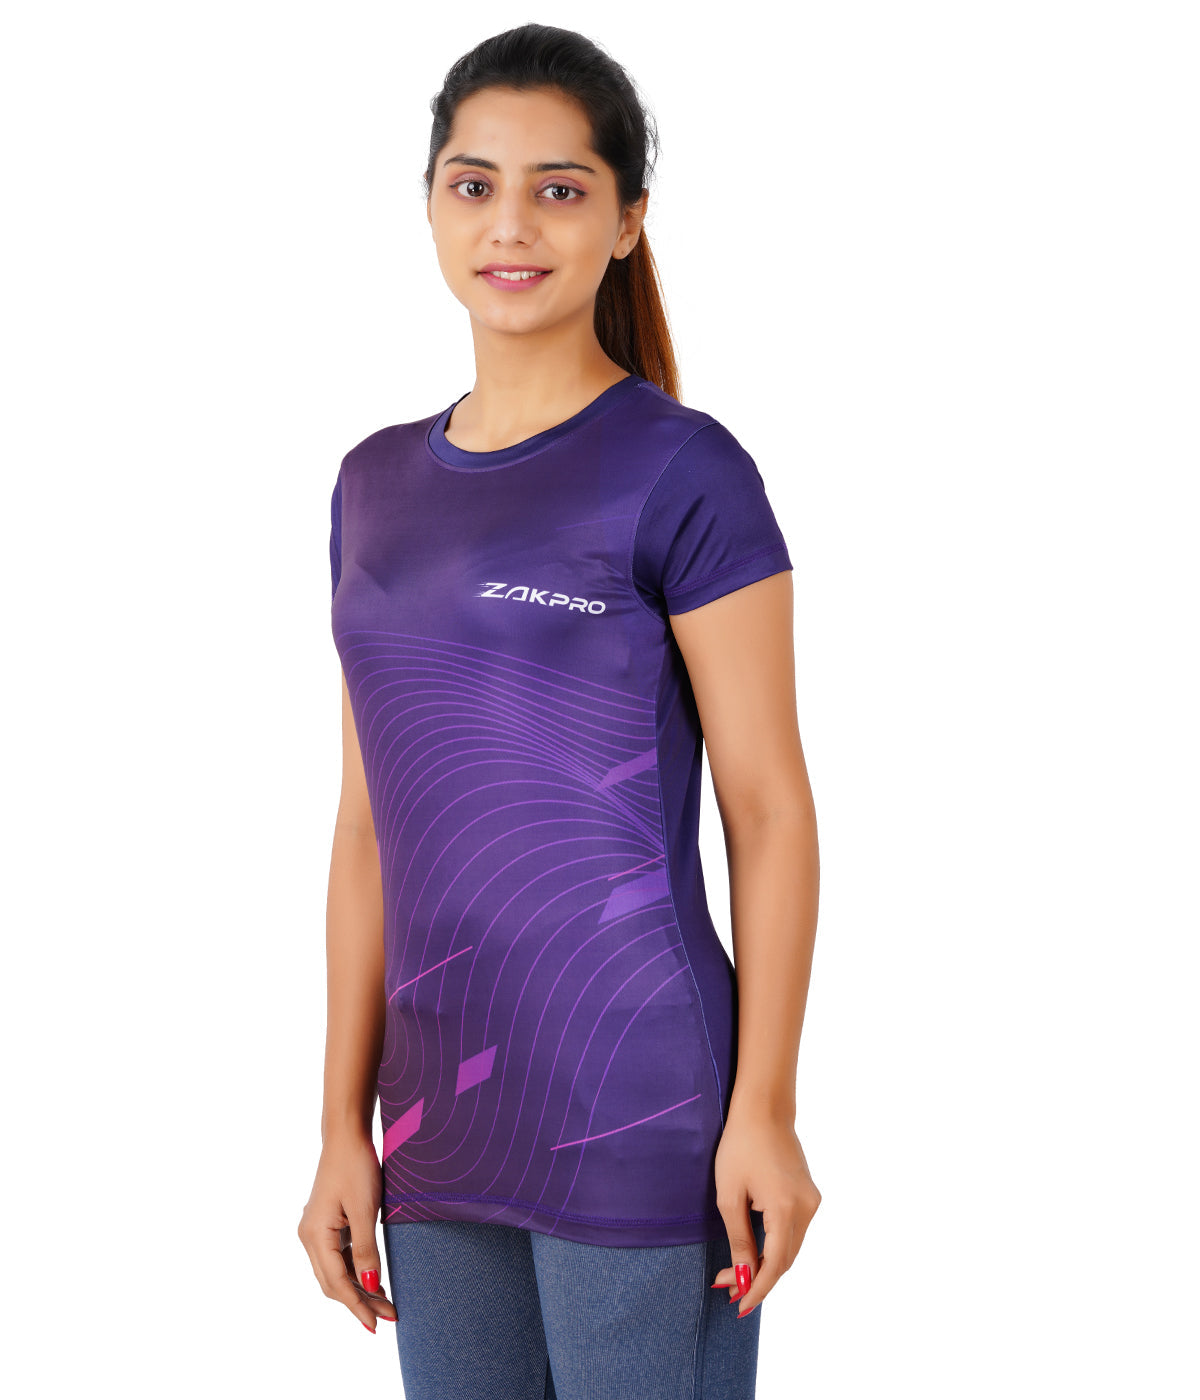 Zakpro Sports Women's Cycling T-Shirt (Purple Wave)